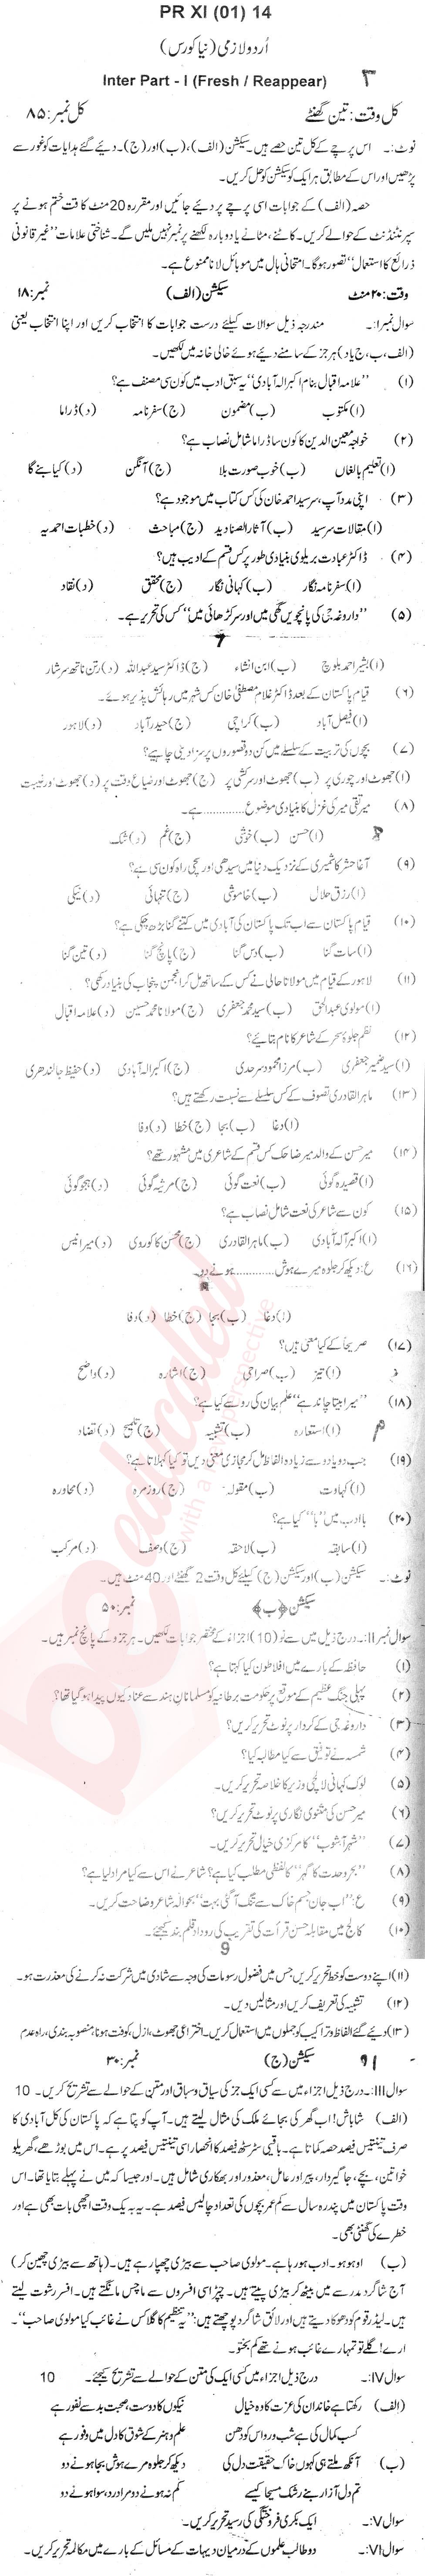 Urdu 11th class Past Paper Group 1 BISE Bannu 2014